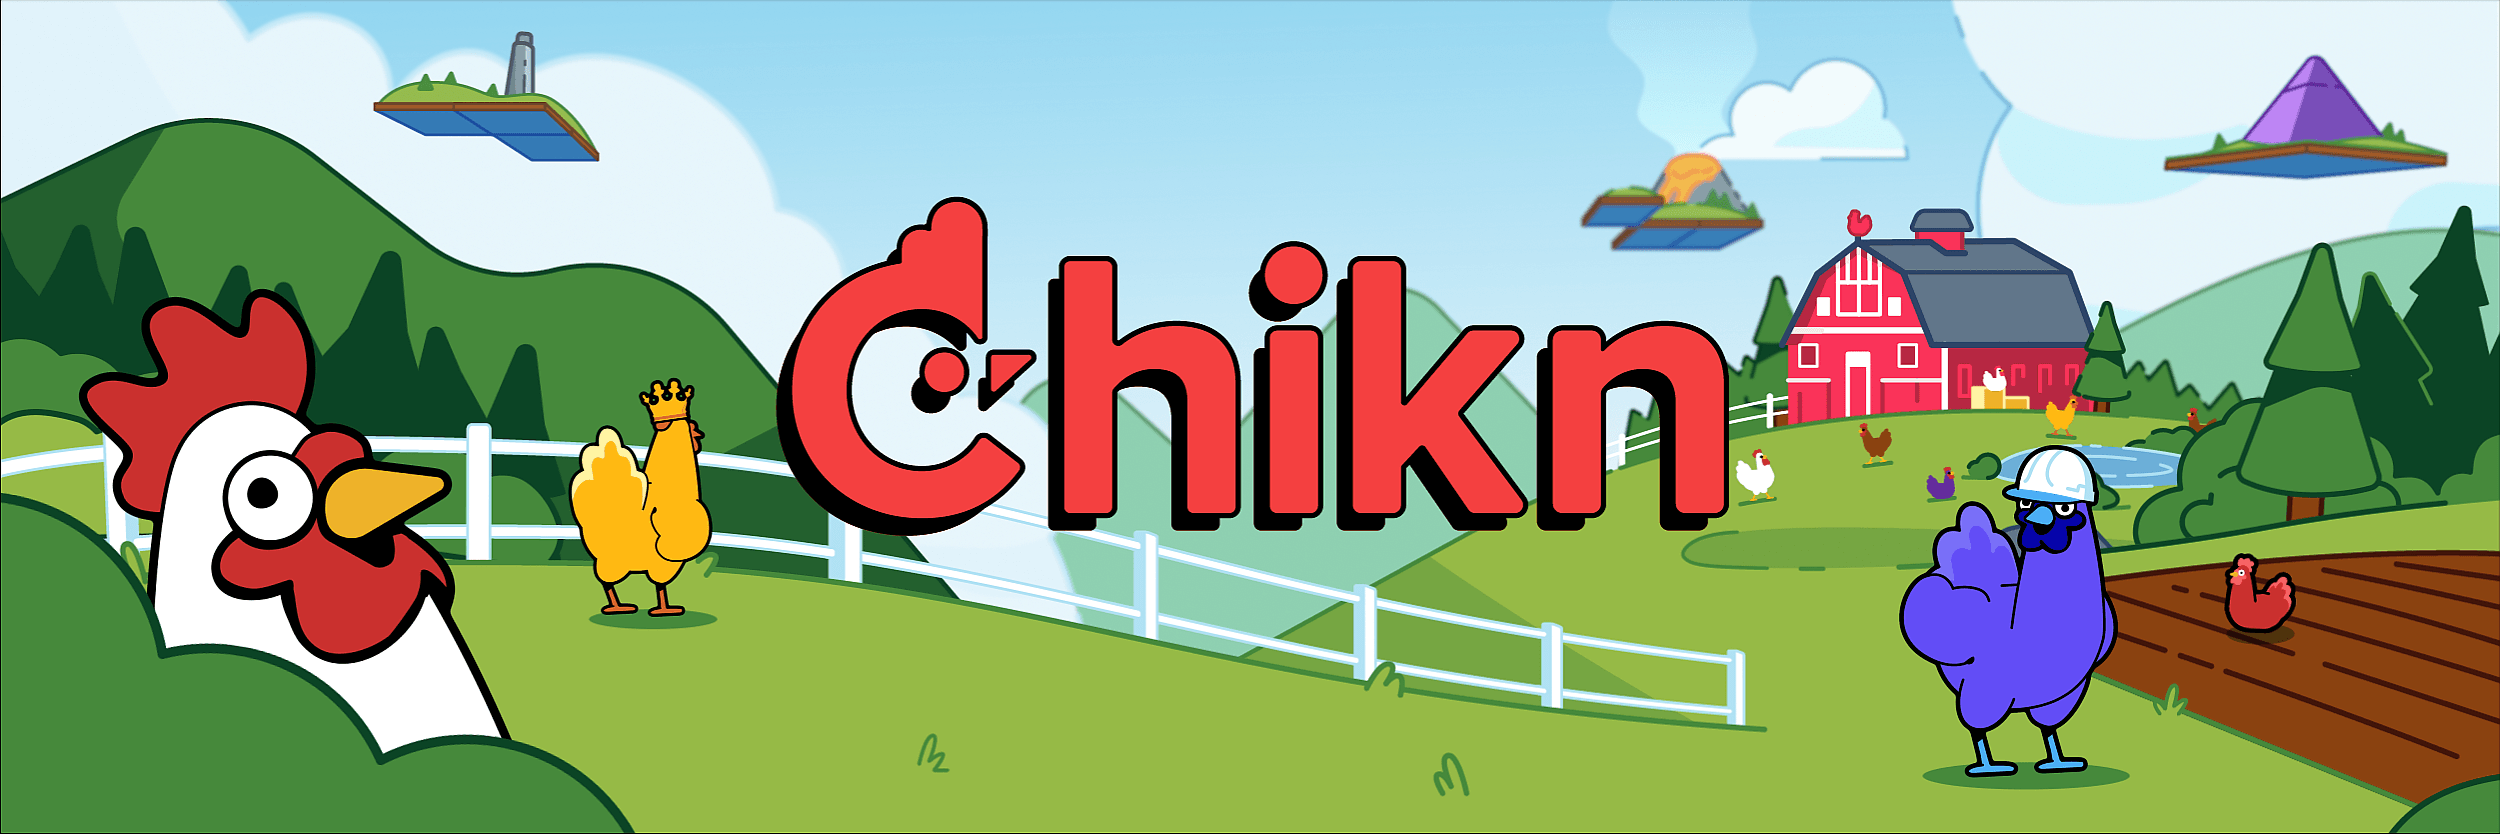 Chikn_Farm banner